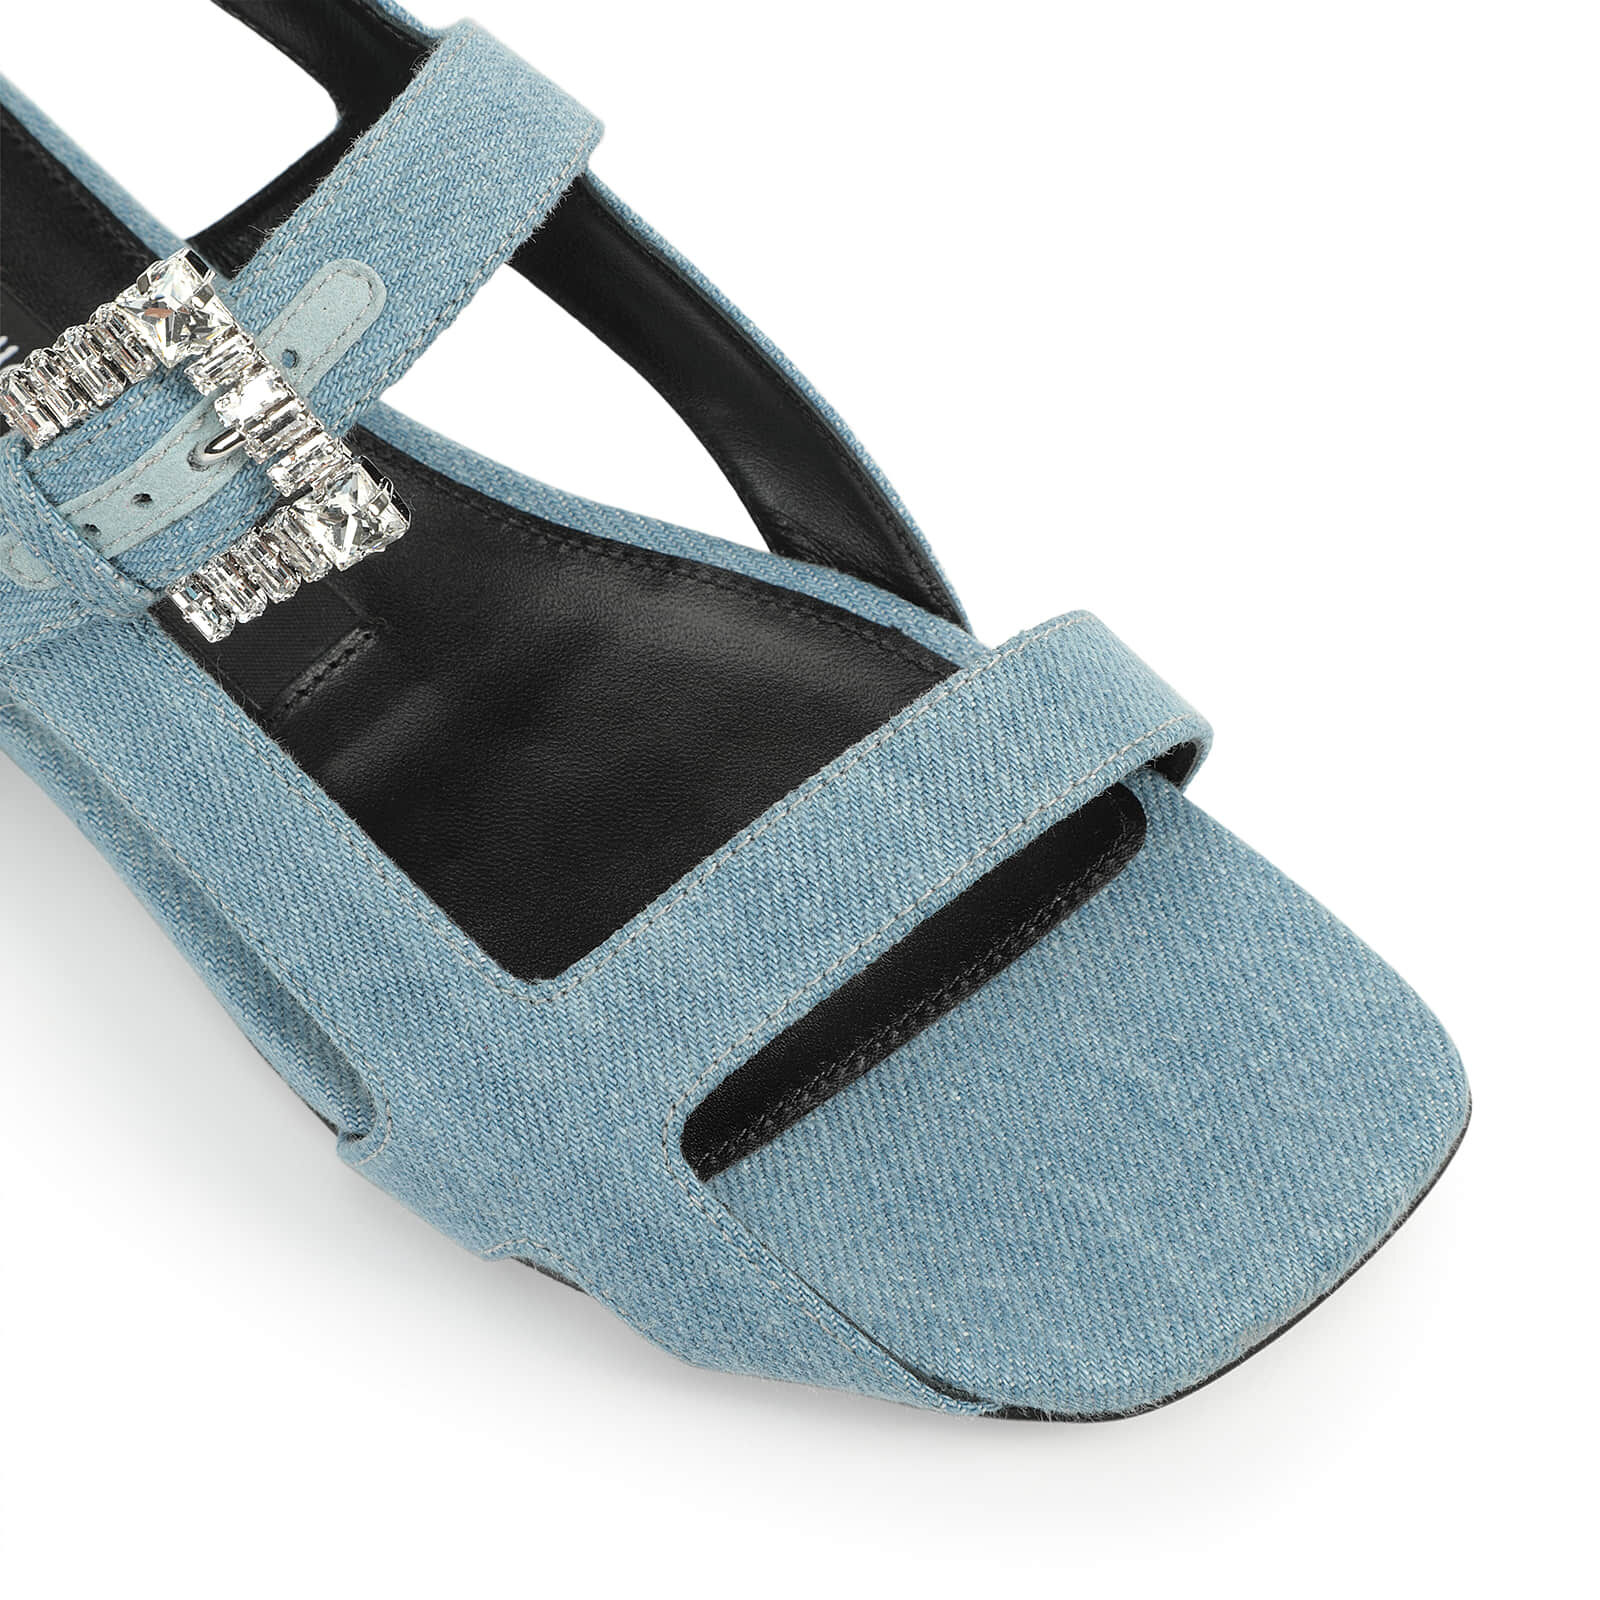 sr Twenty - Sandals Blue, 4